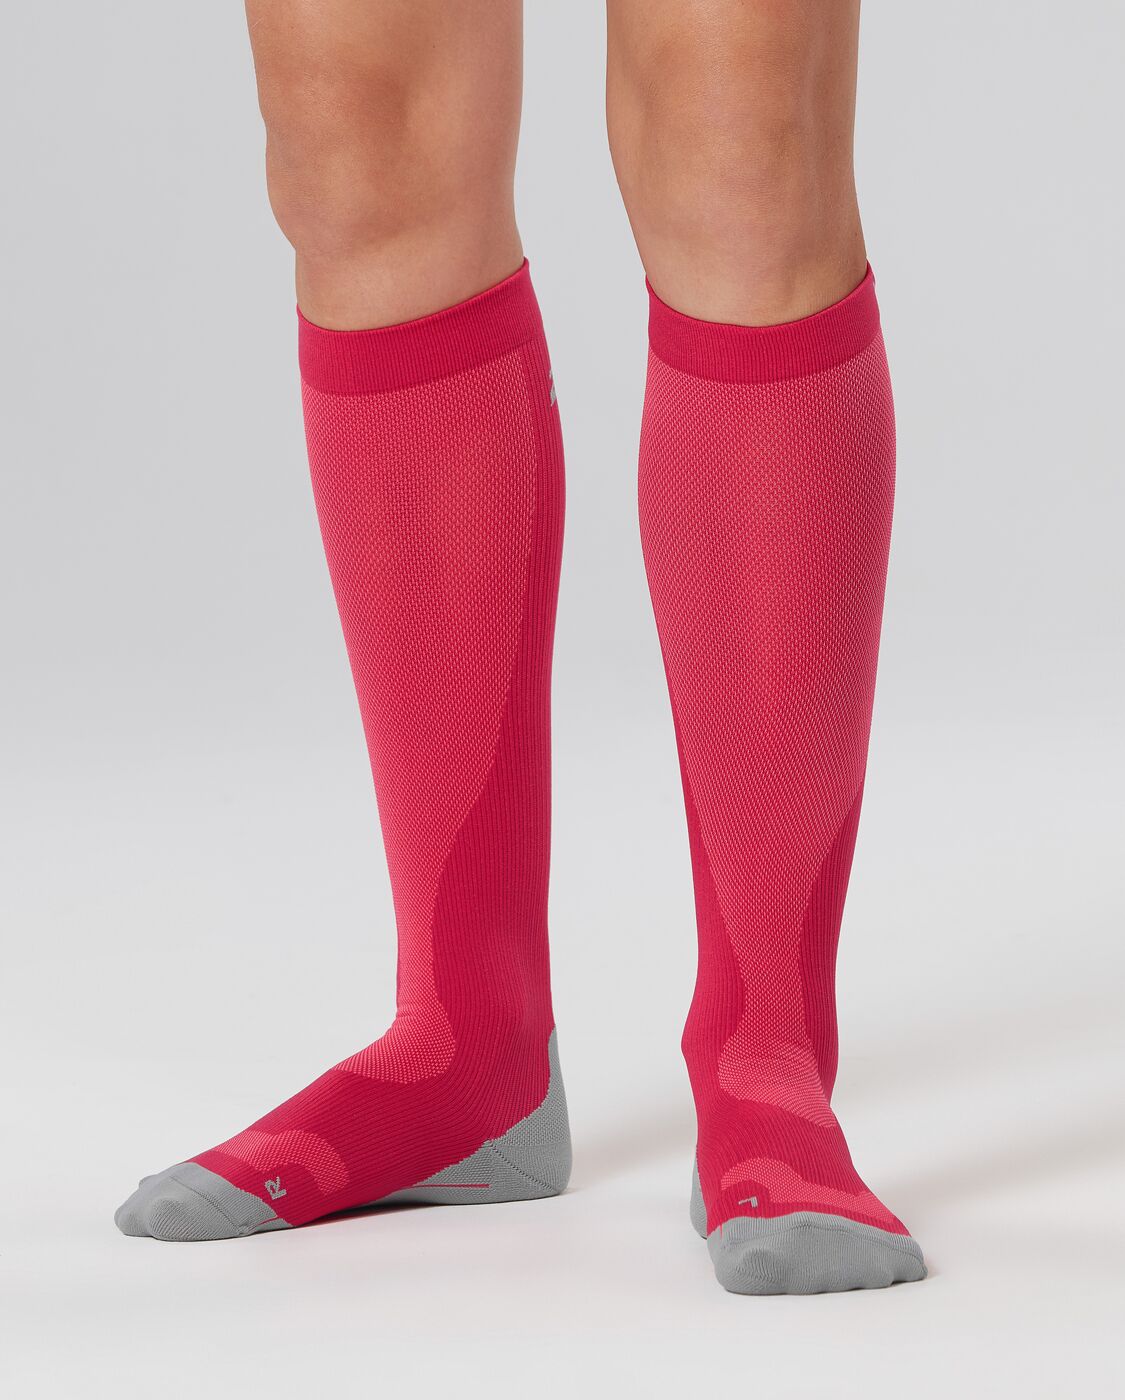 Perf Run Knee Length Compression Socks, Hot Pink/Grey